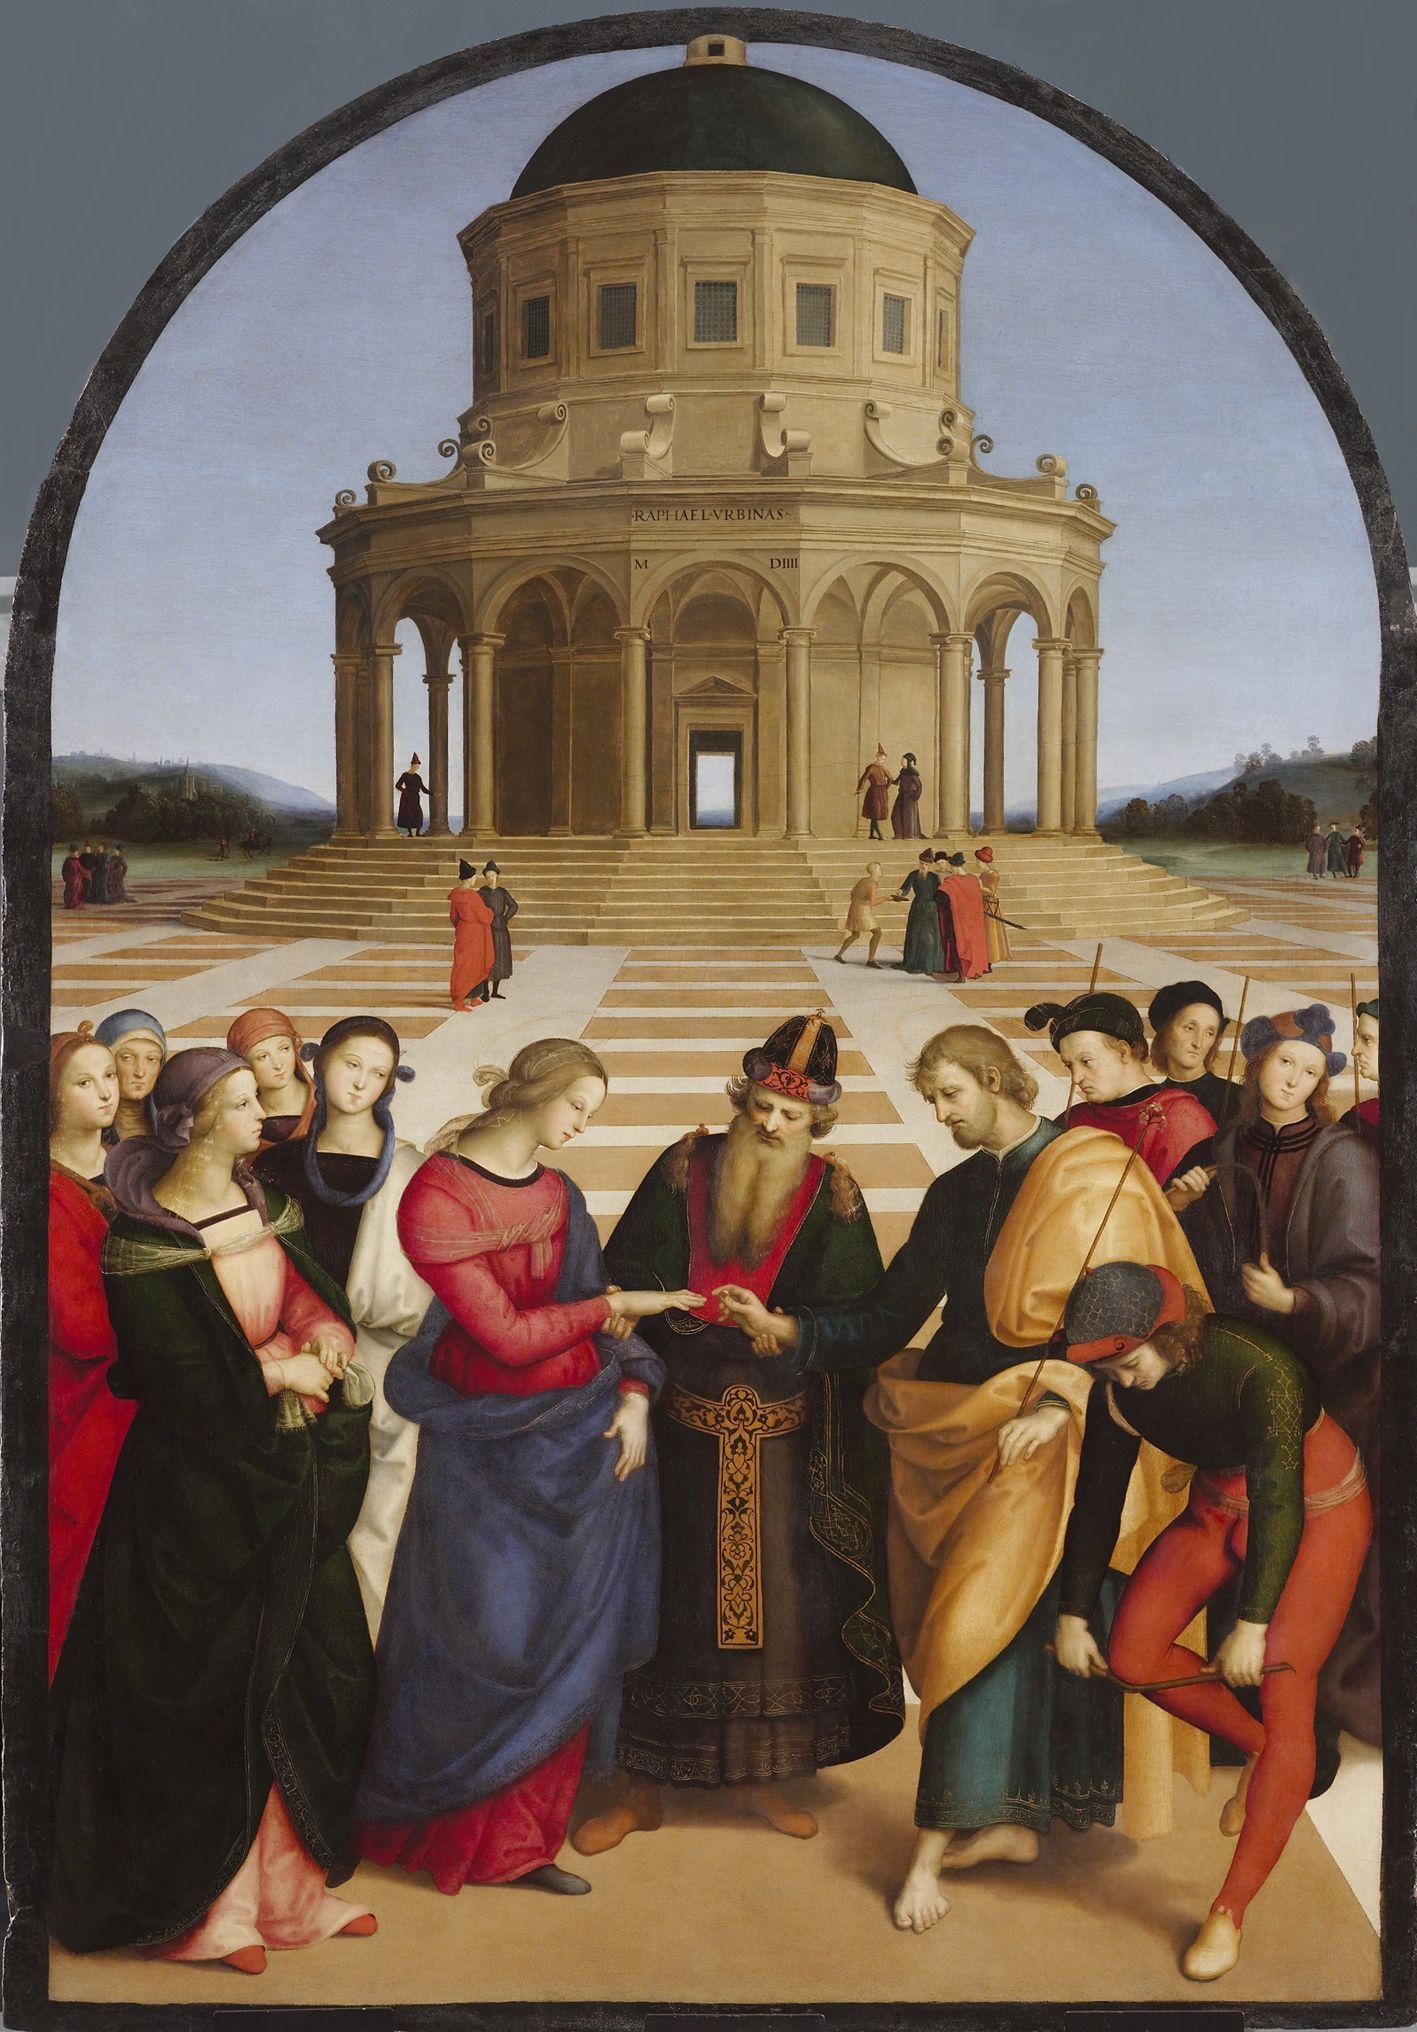 Svatba Panny Marie by Raphael Santi - 1504 - 170 x 118 cm 